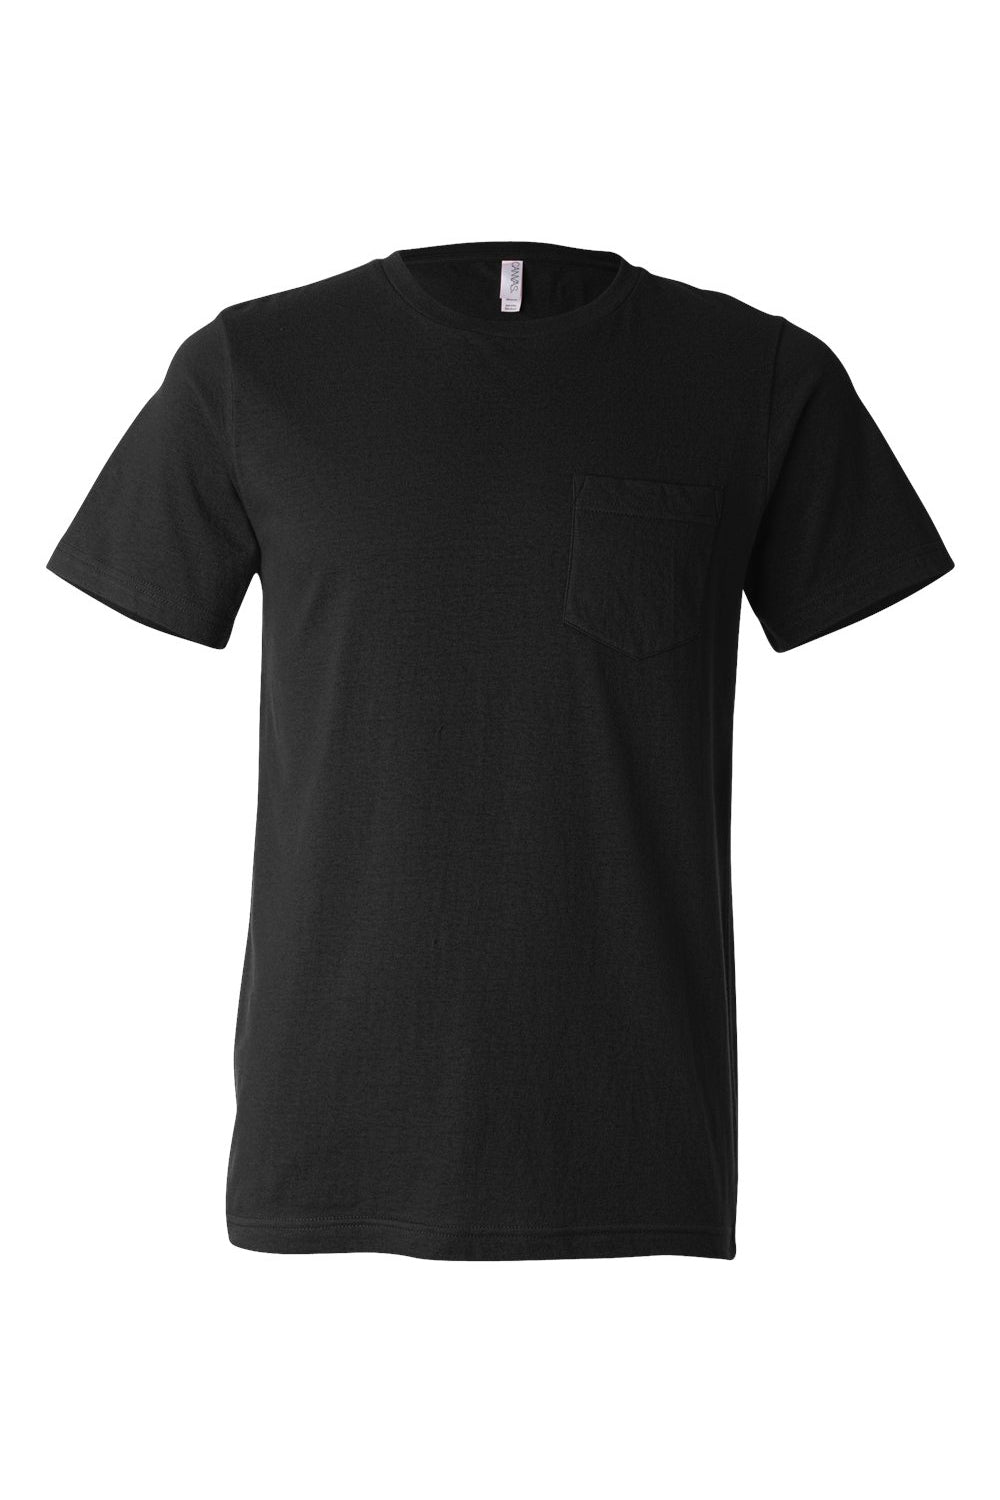 Bella + Canvas 3021 Mens Jersey Short Sleeve Crewneck T-Shirt w/ Pocket Black Flat Front